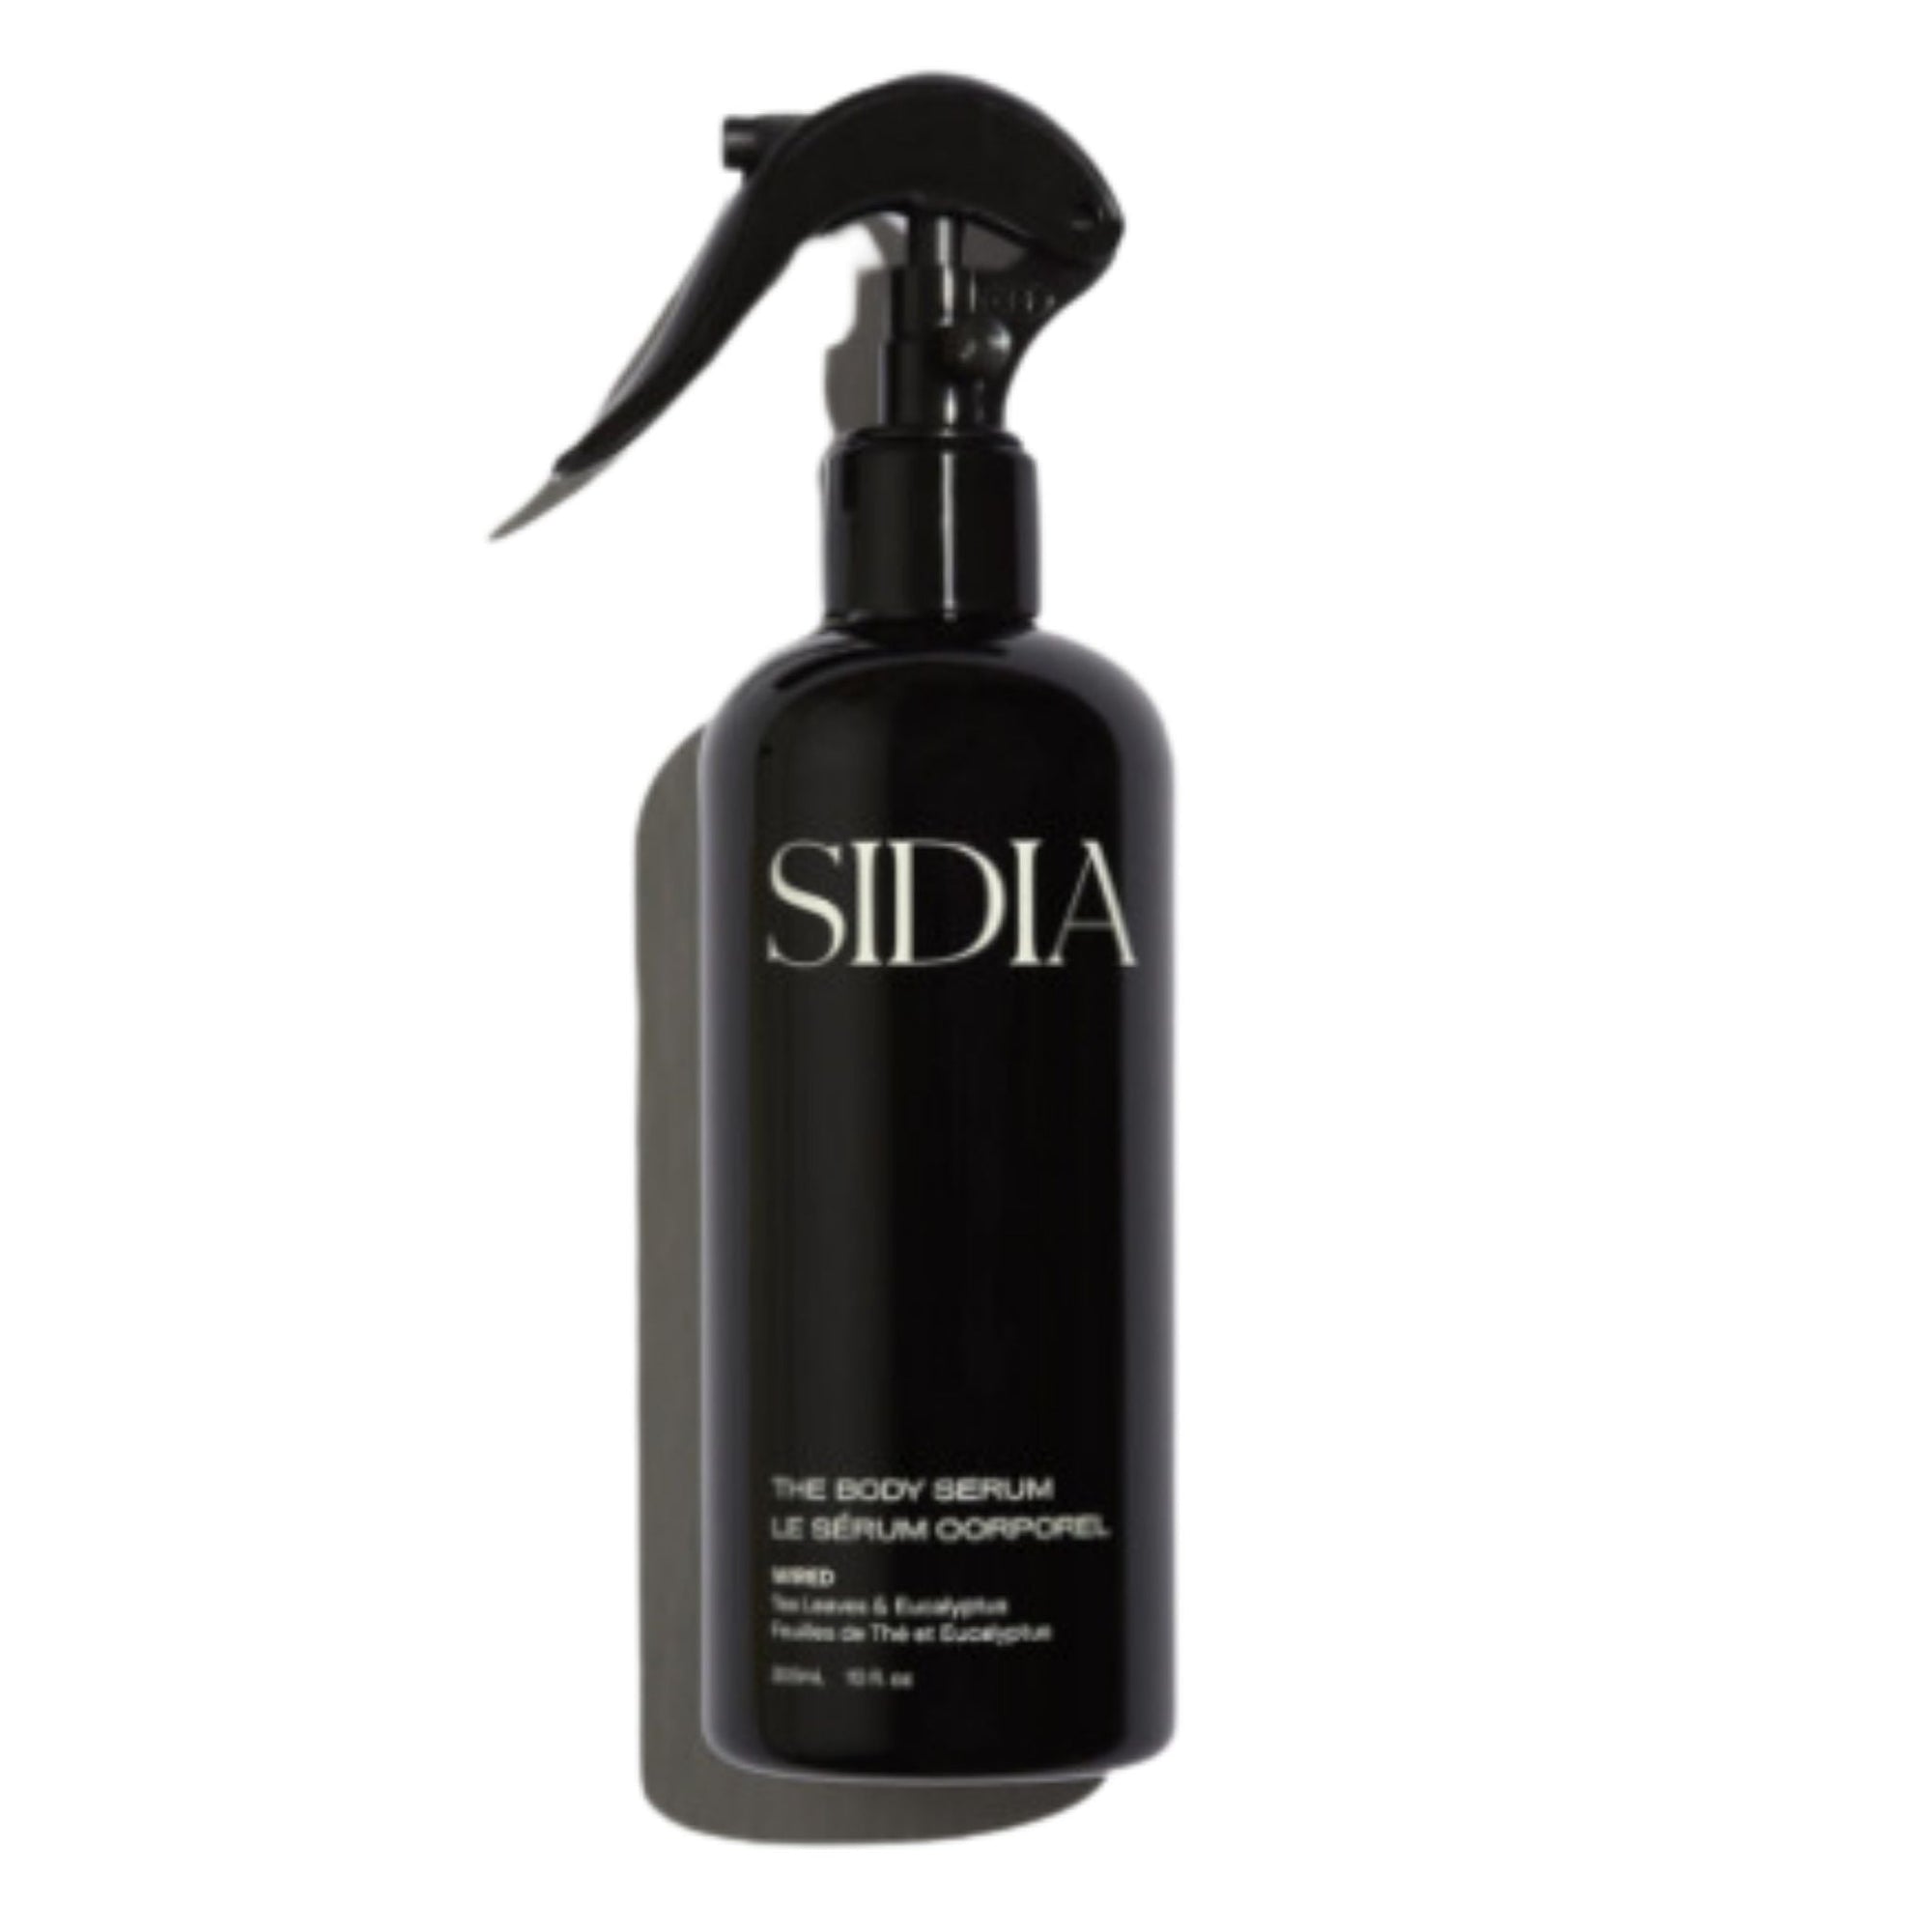 SIDIA - SIDIA Body Serum - ORESTA clean beauty simplified